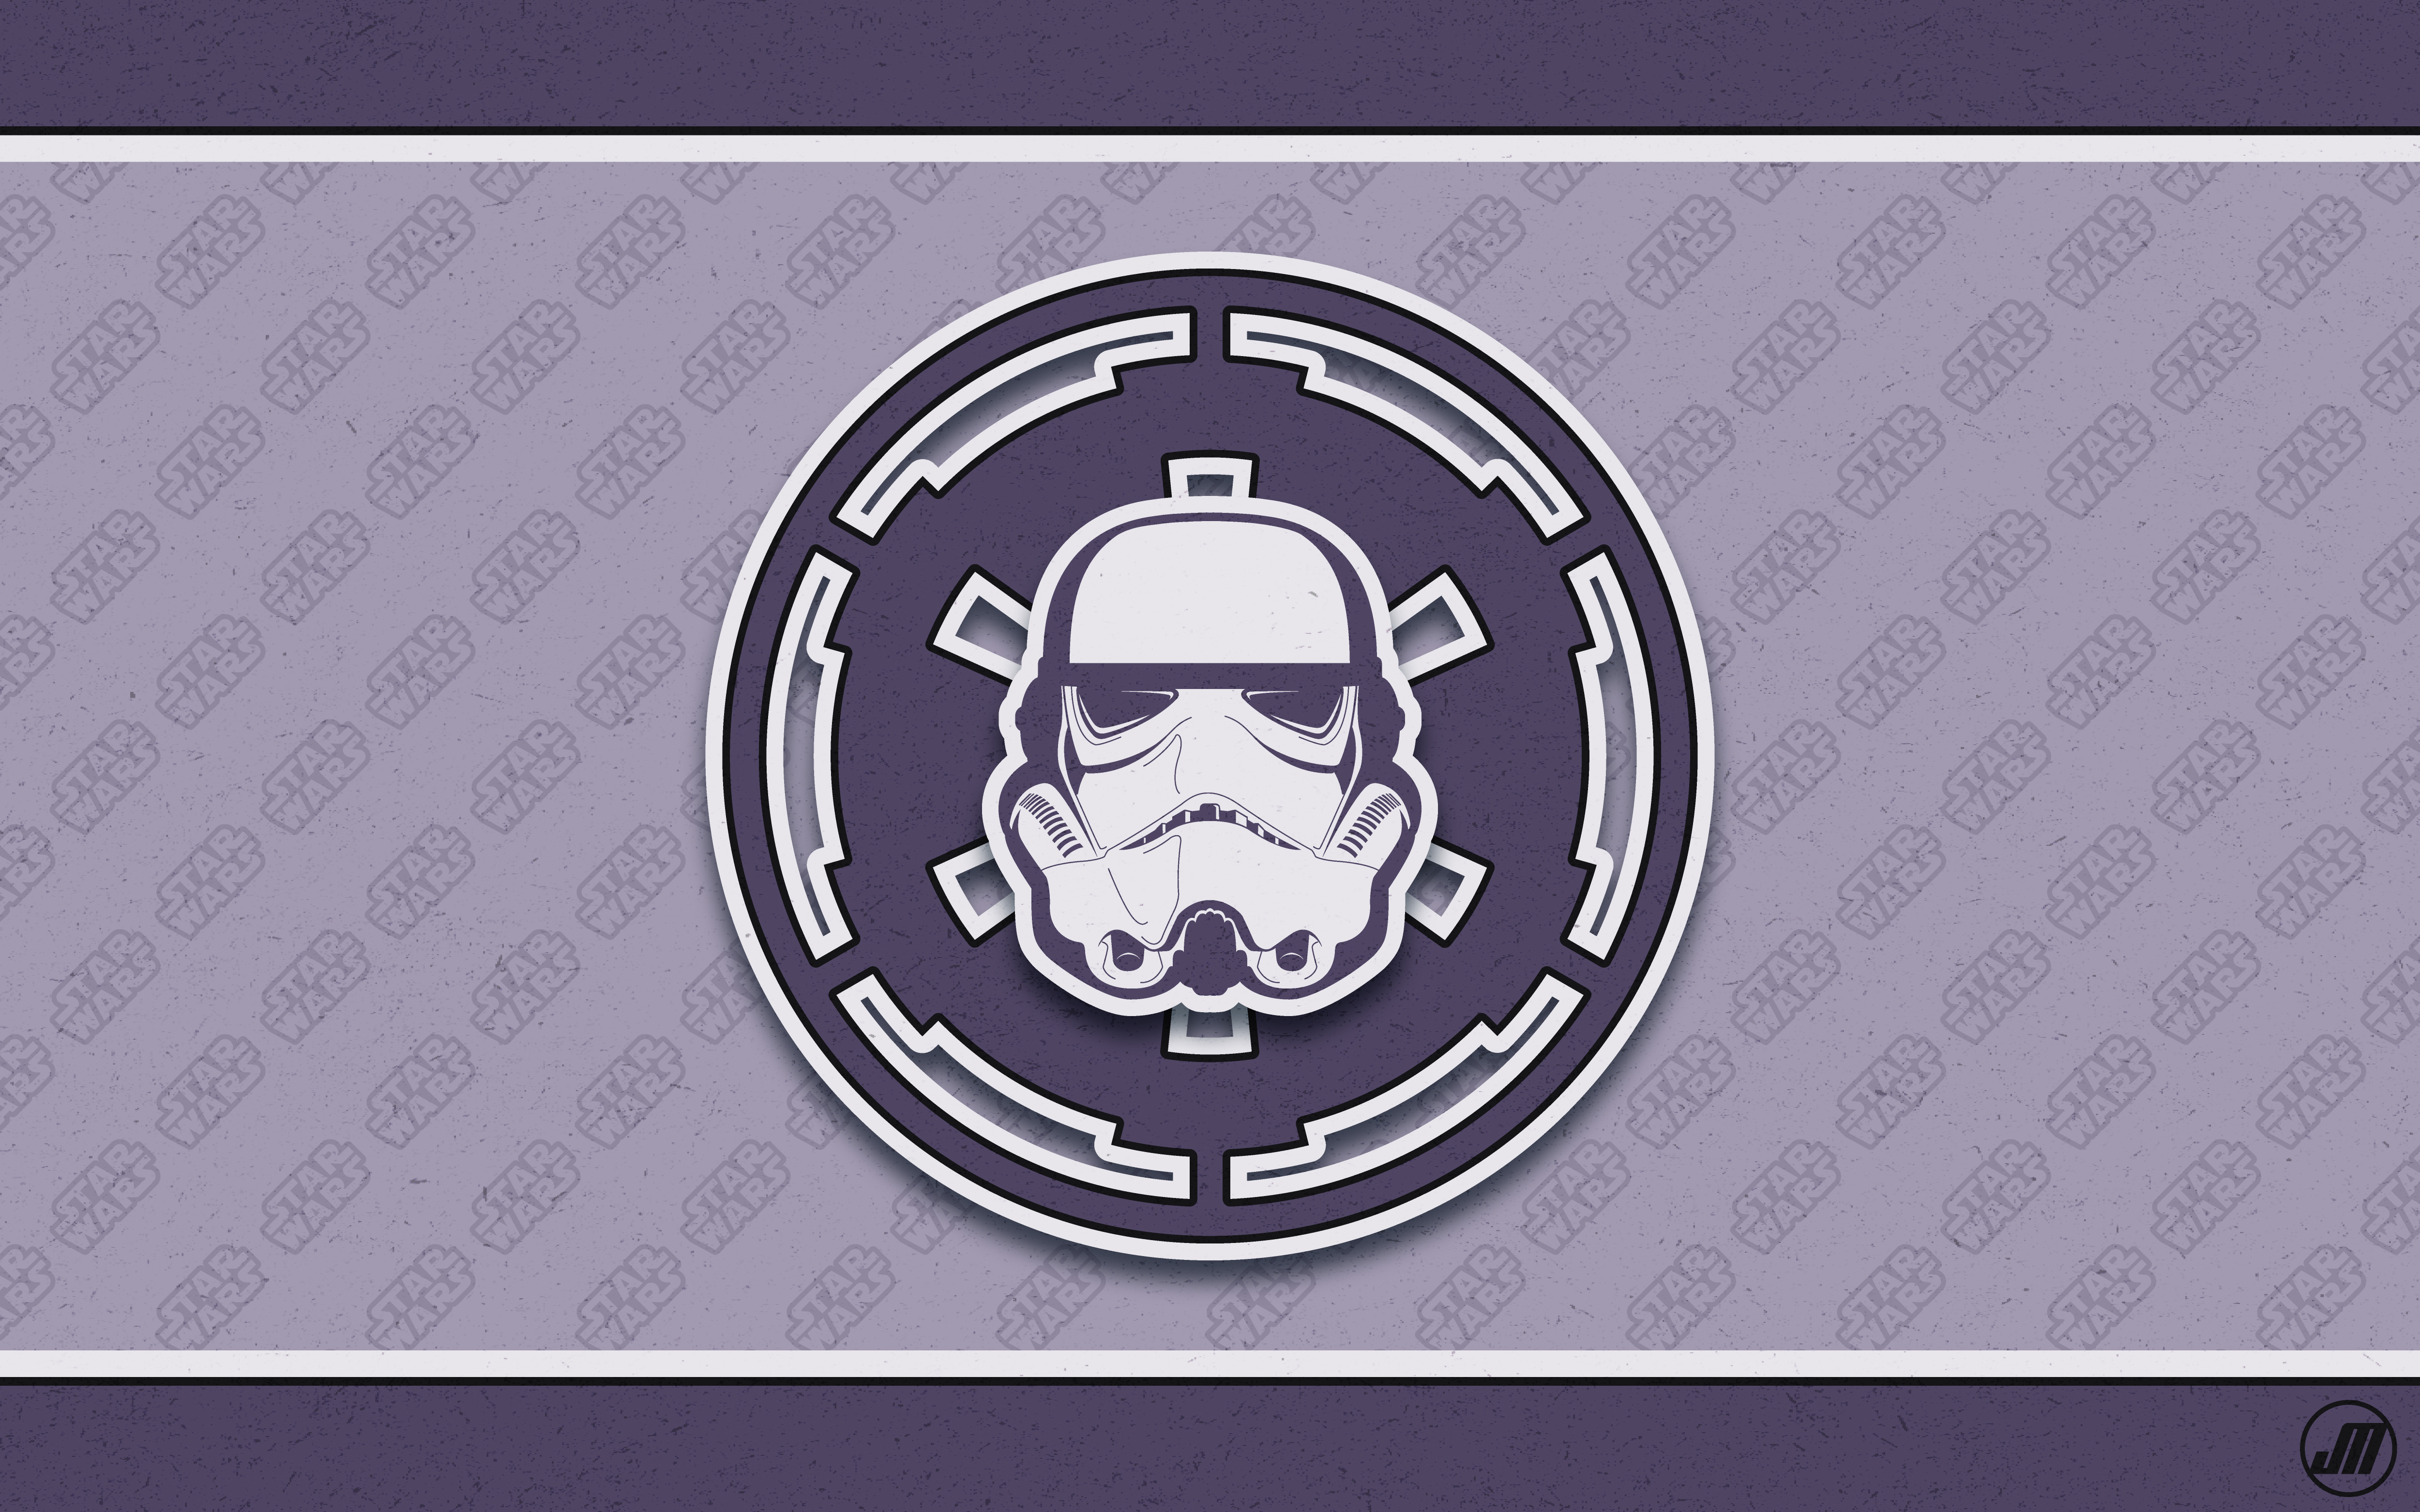 Stormtrooper Background Purple by JRMurray76 on DeviantArt